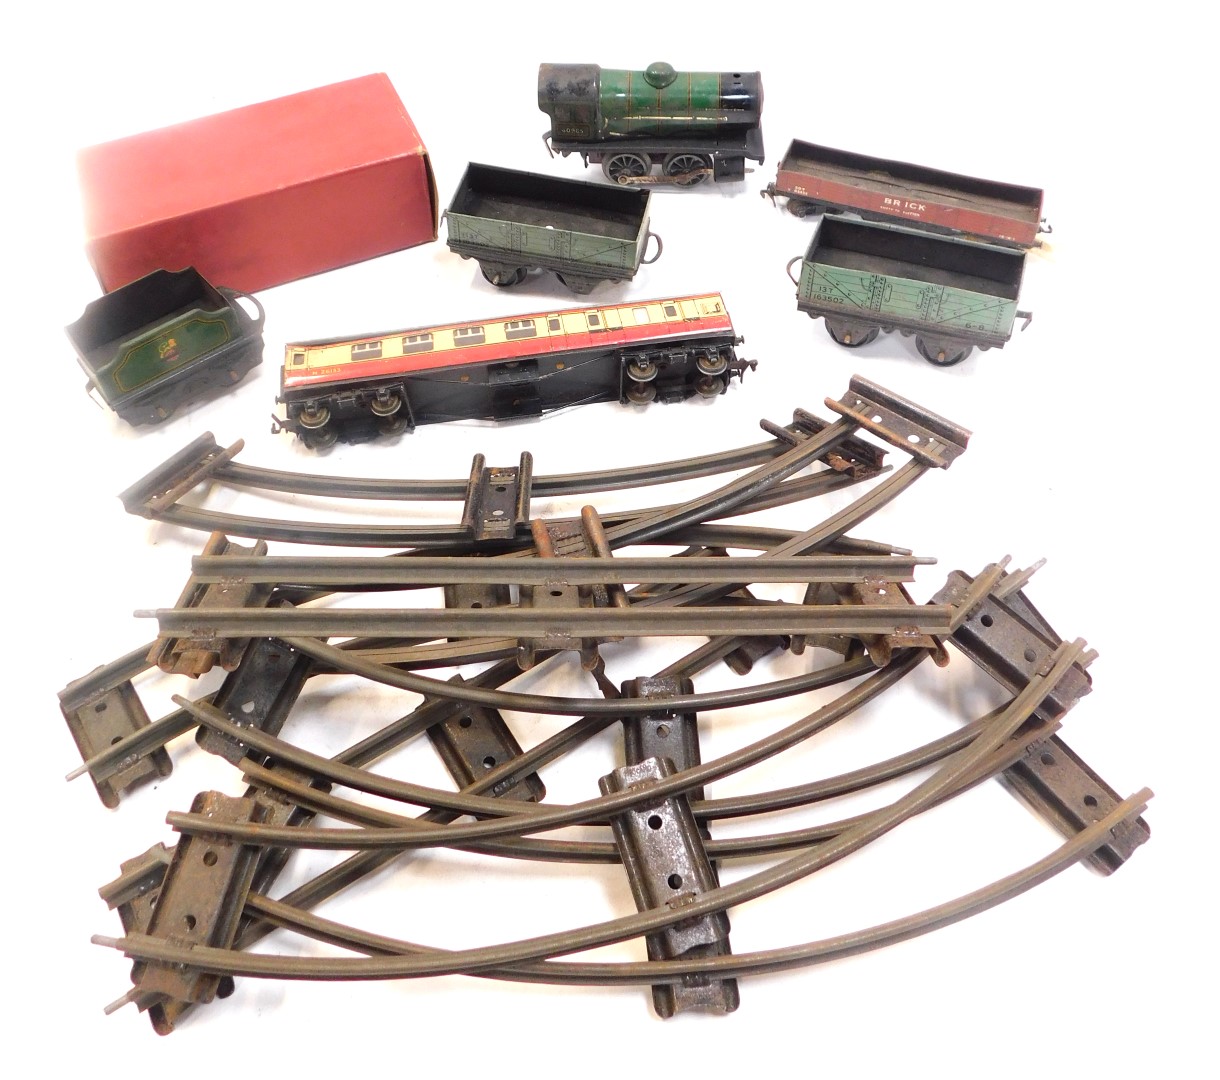 A Hornby O gauge clockwork tinplate train set, including 0-4-0 locomotive, plank wagons and track.